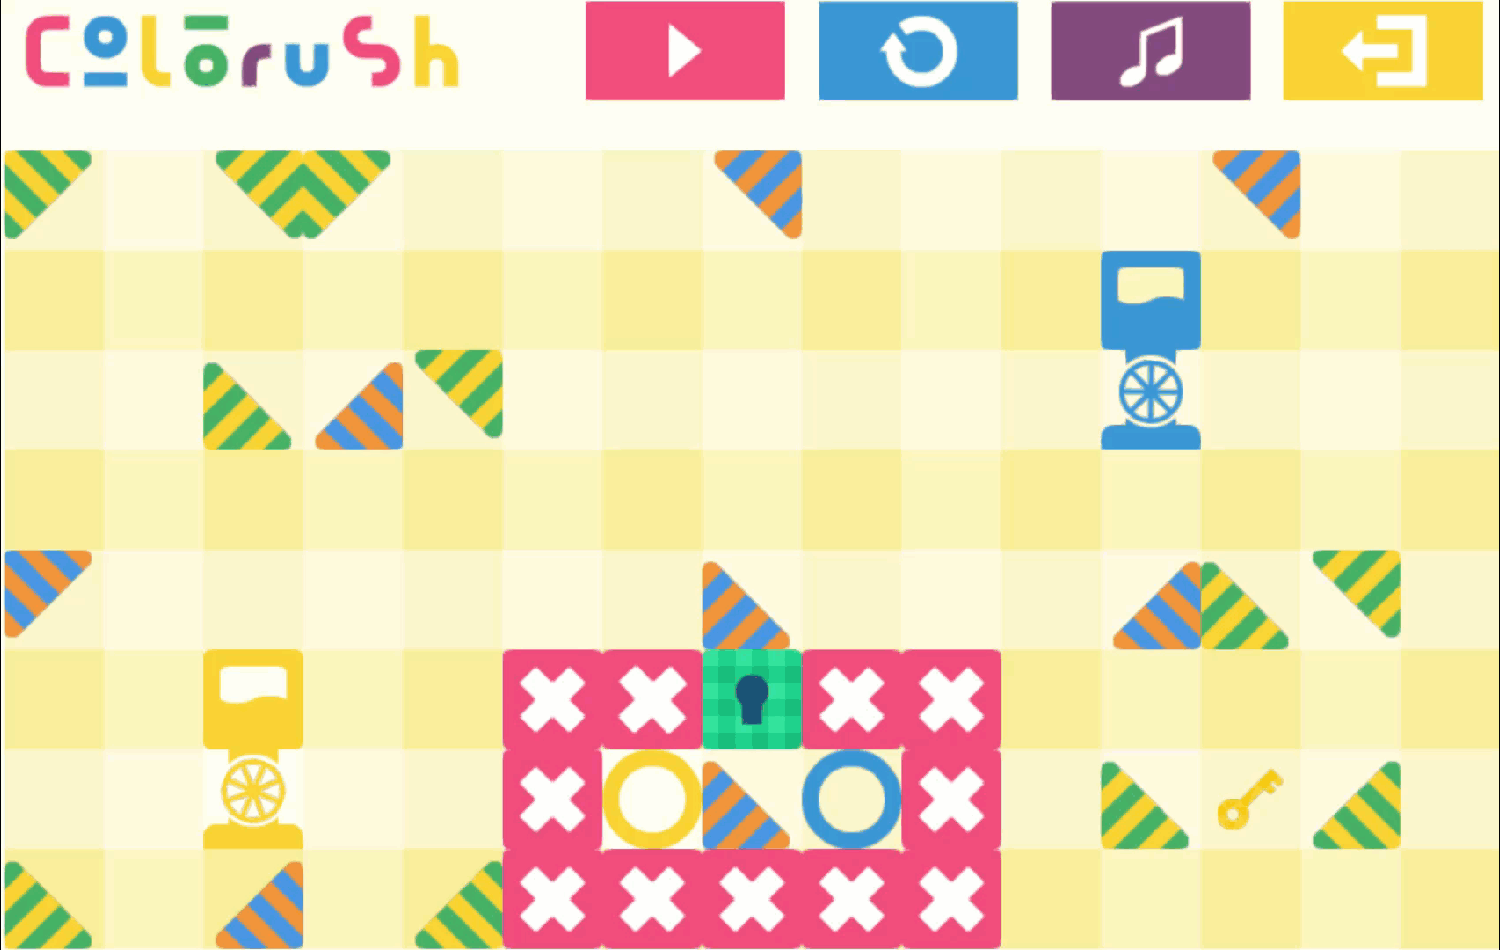 Colorush Game Level 13 Screenshot.